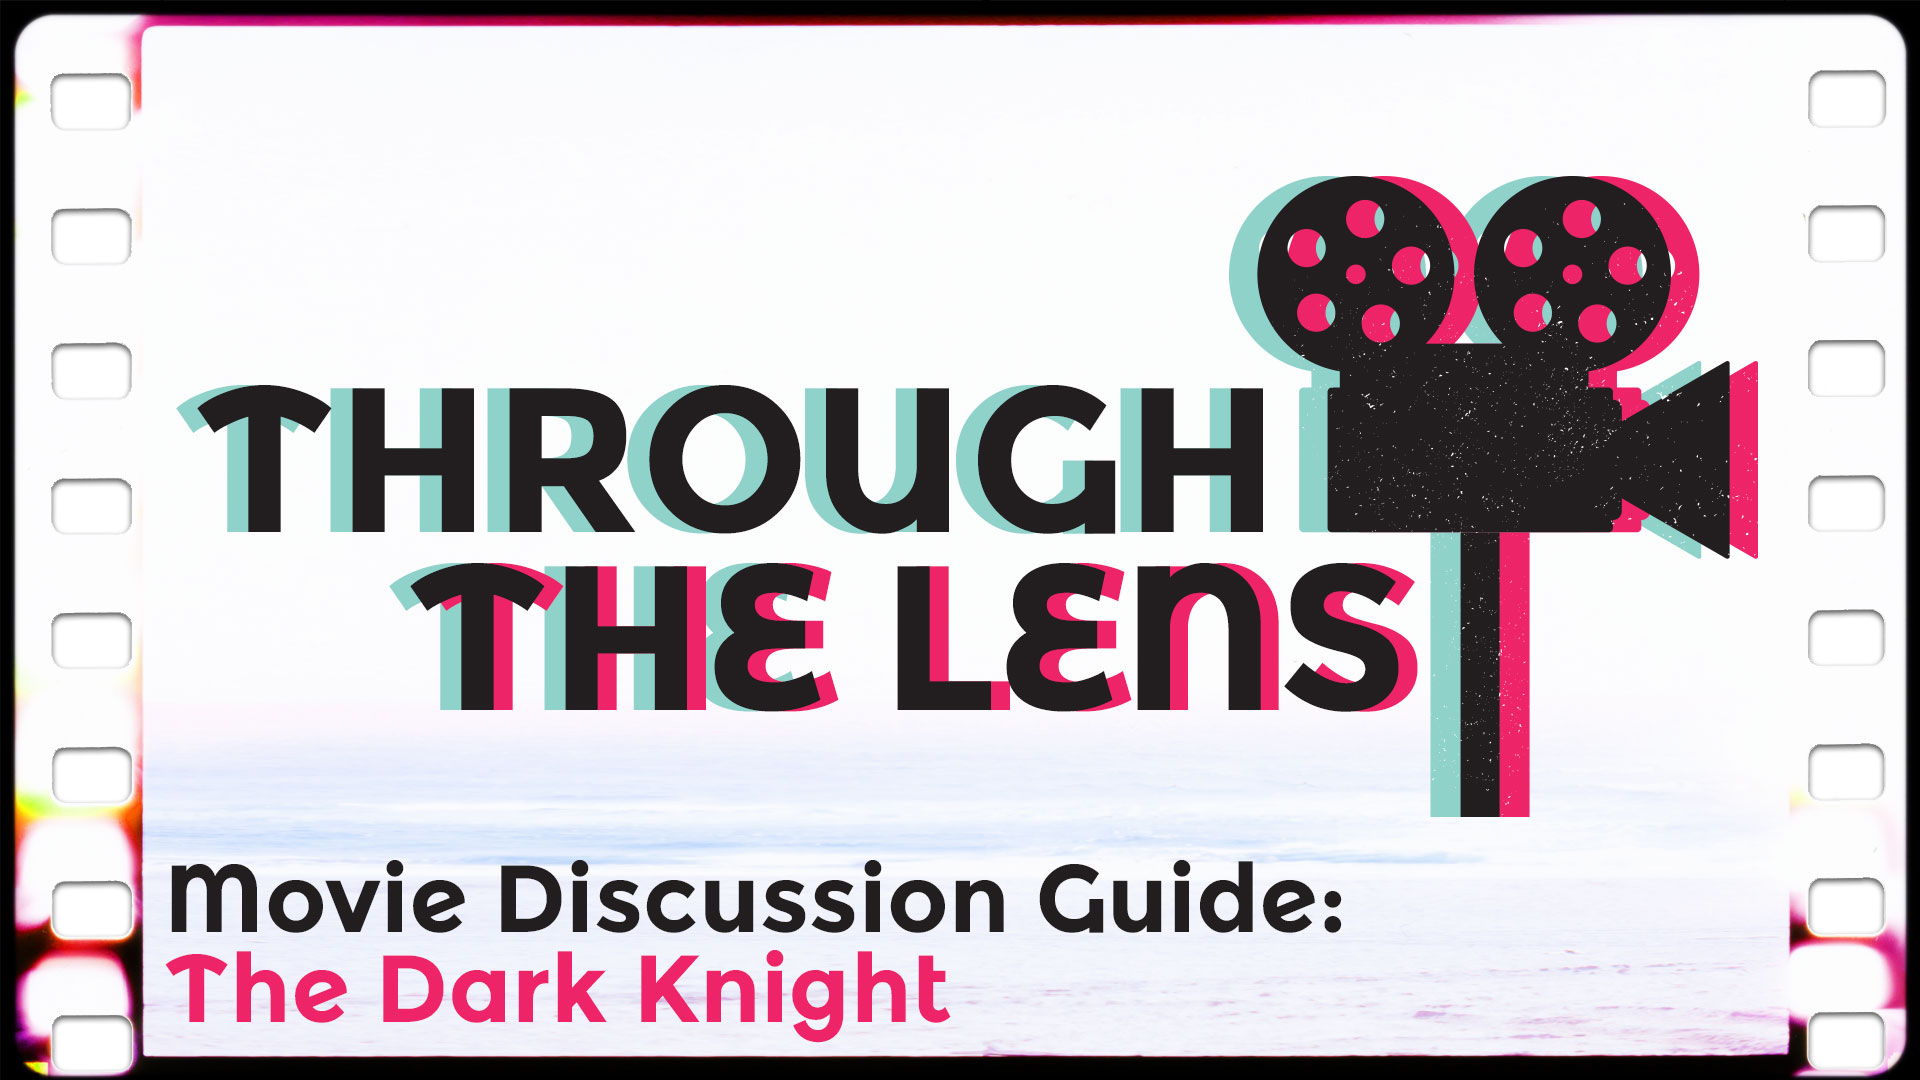 Movie Discussion Guide: The Dark Knight